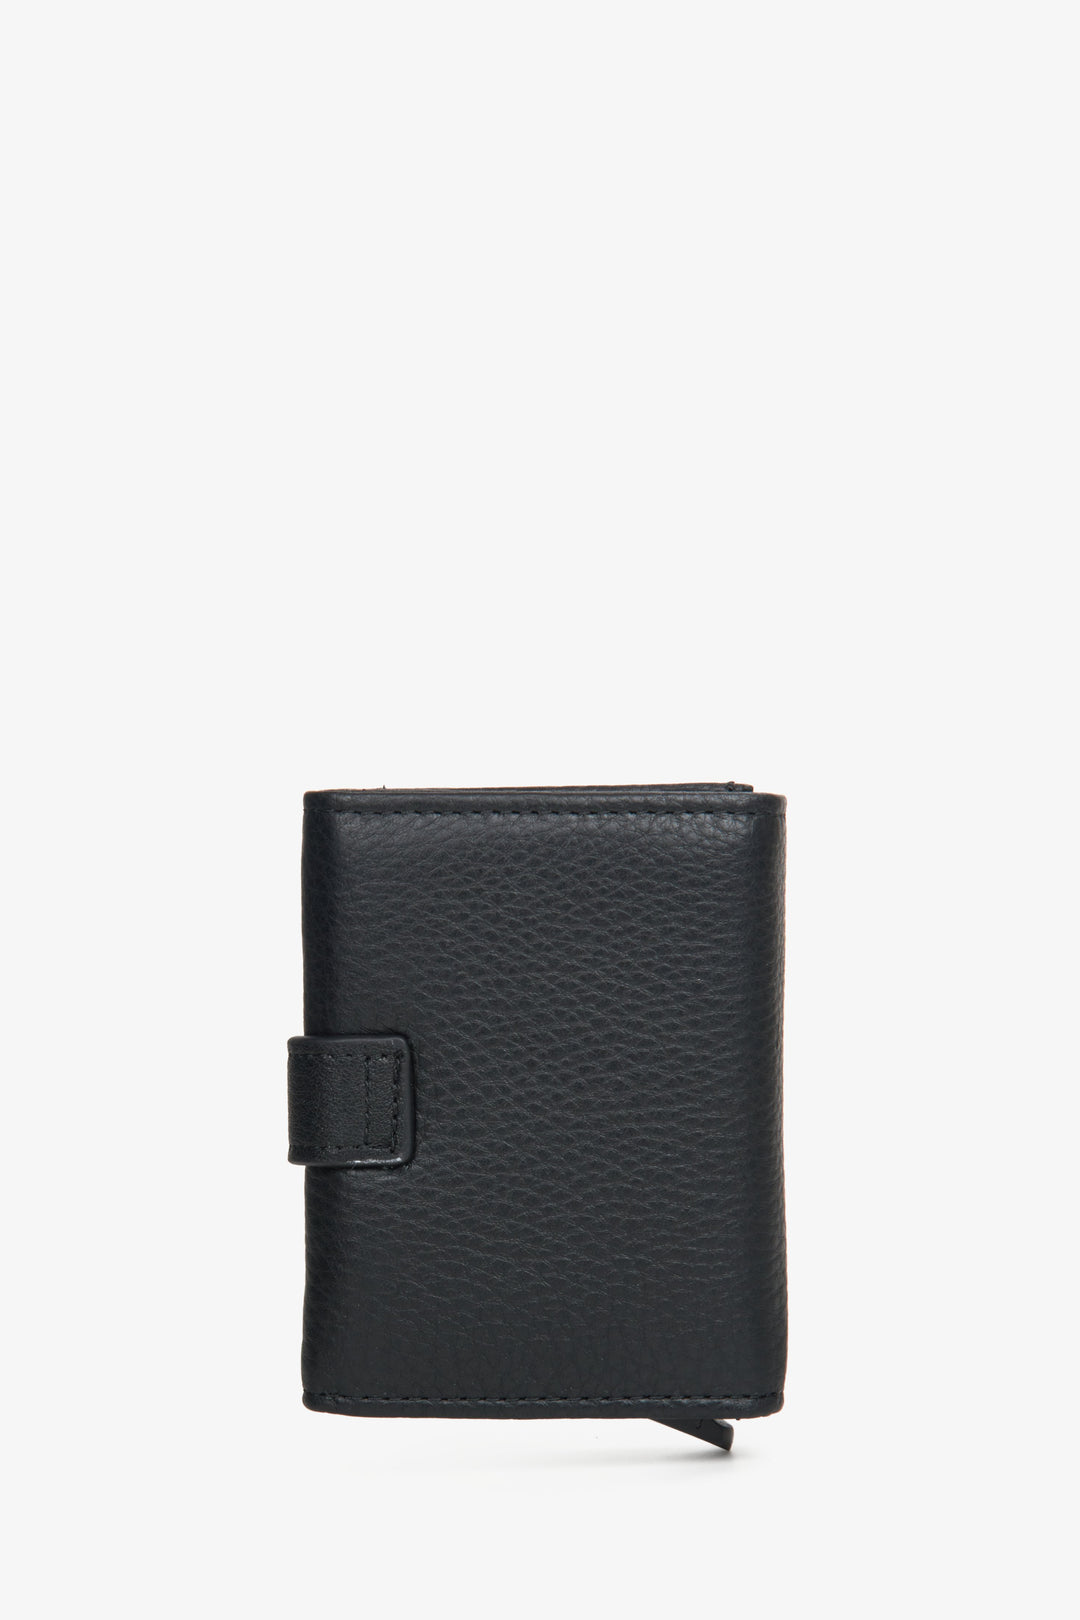 The back of the handy black men's wallet by Estro.